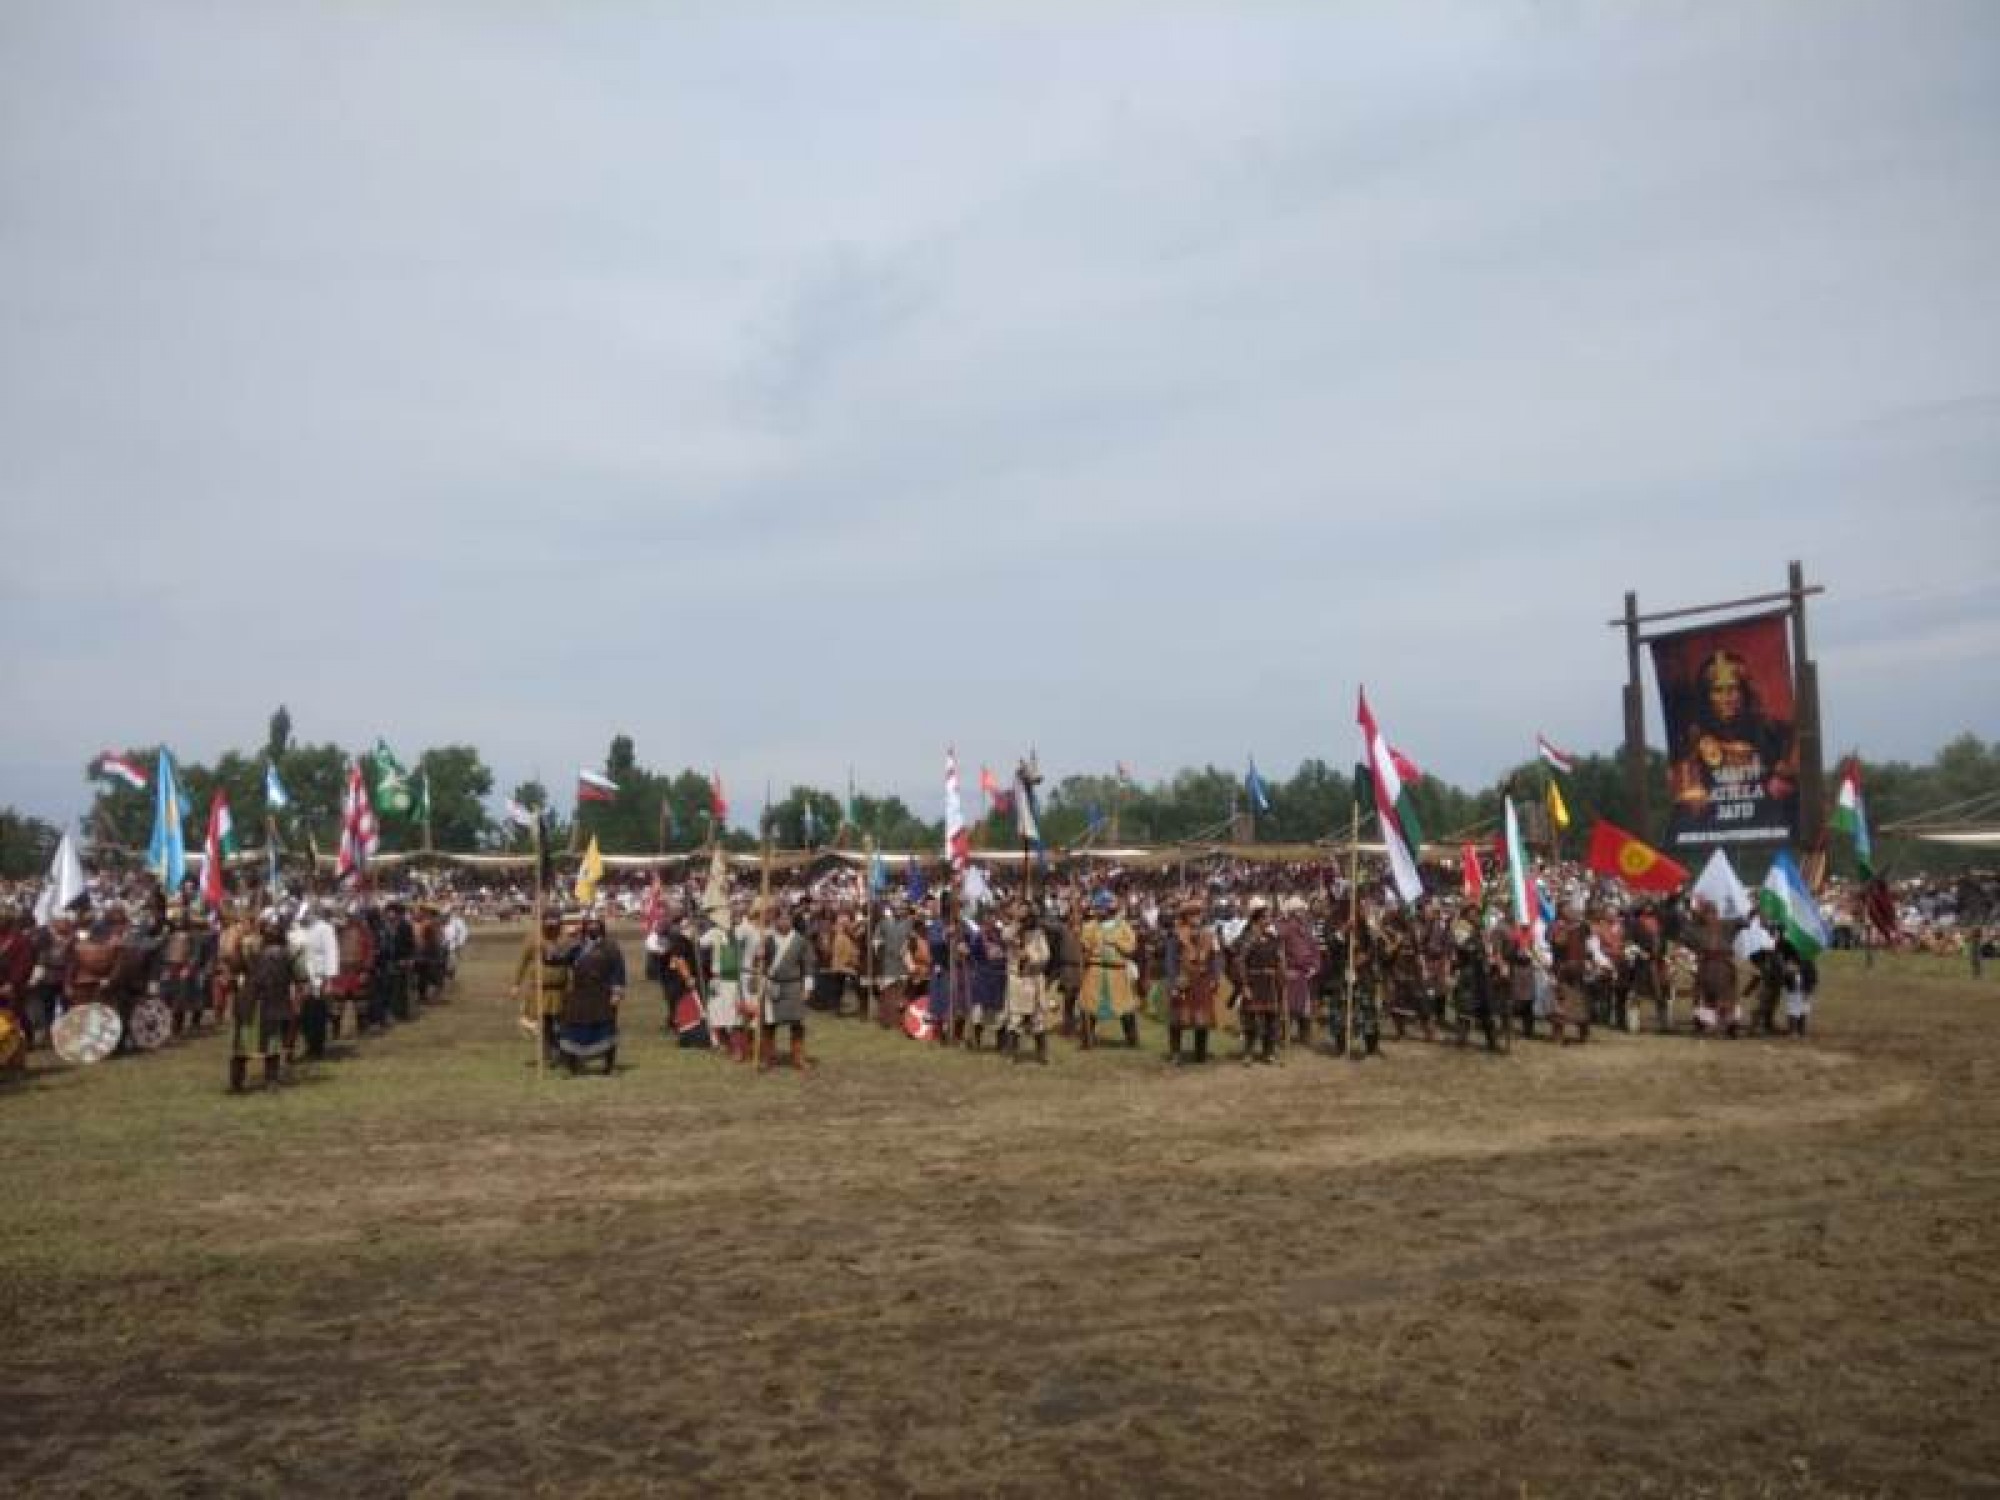 10th International Kurultaj of Turan Peoples starts in Bugac, Hungary